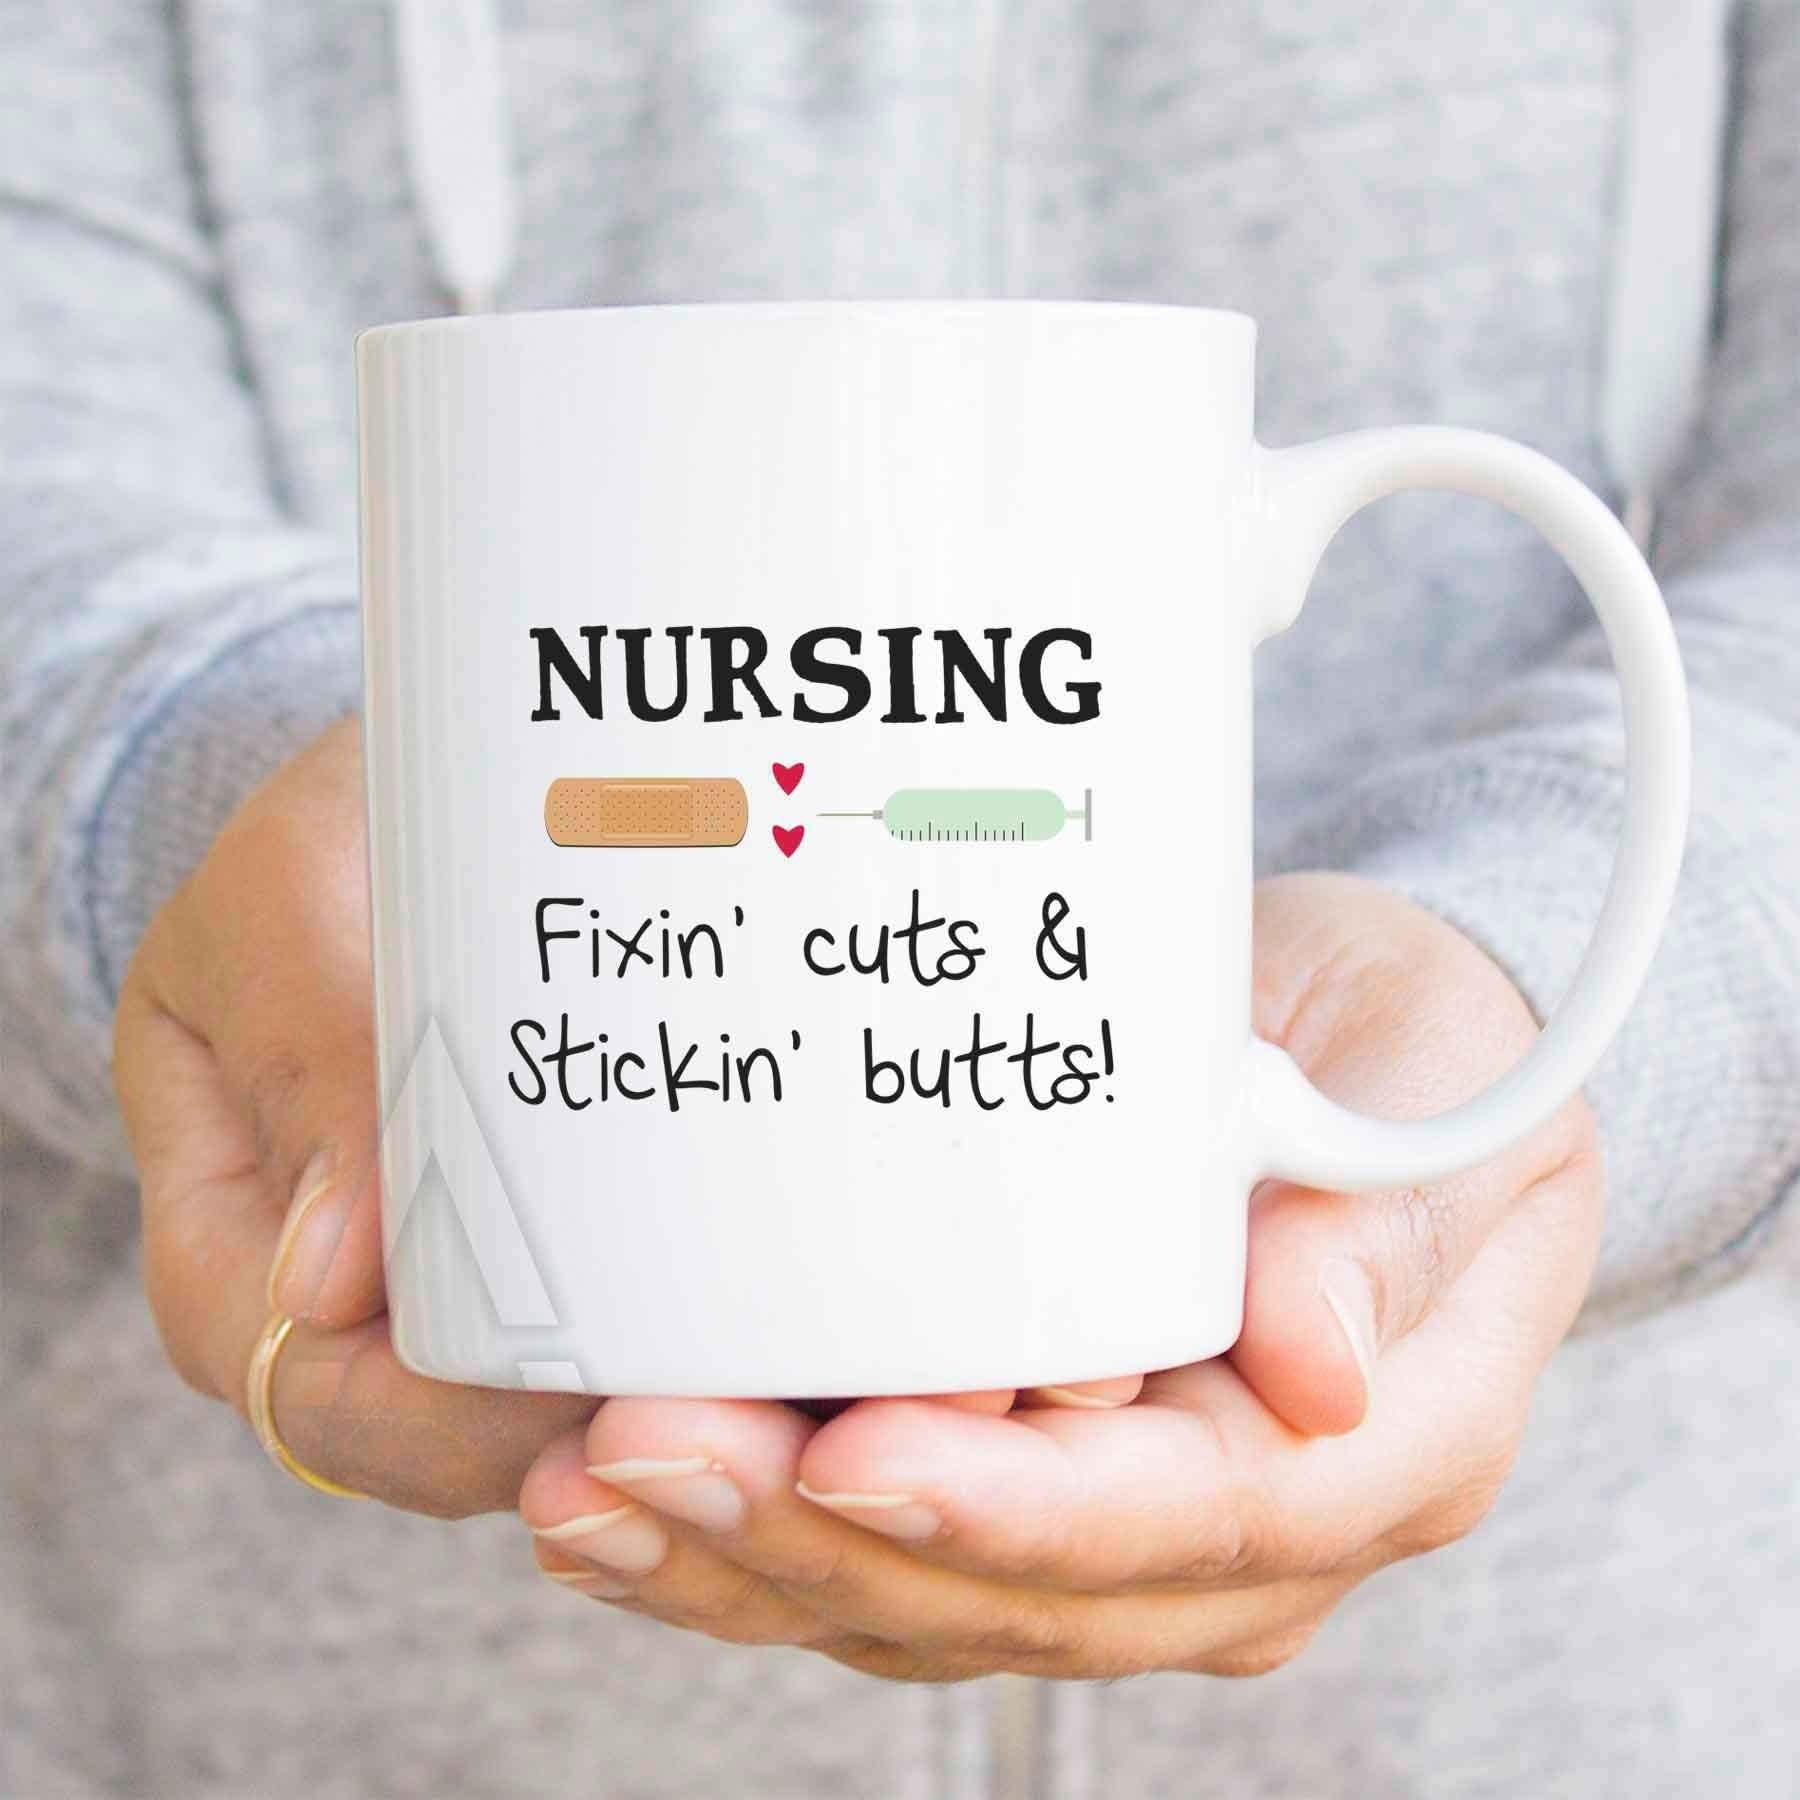 Nurse T Ideas For Nurses Week Staff Appreciation Or Nurse